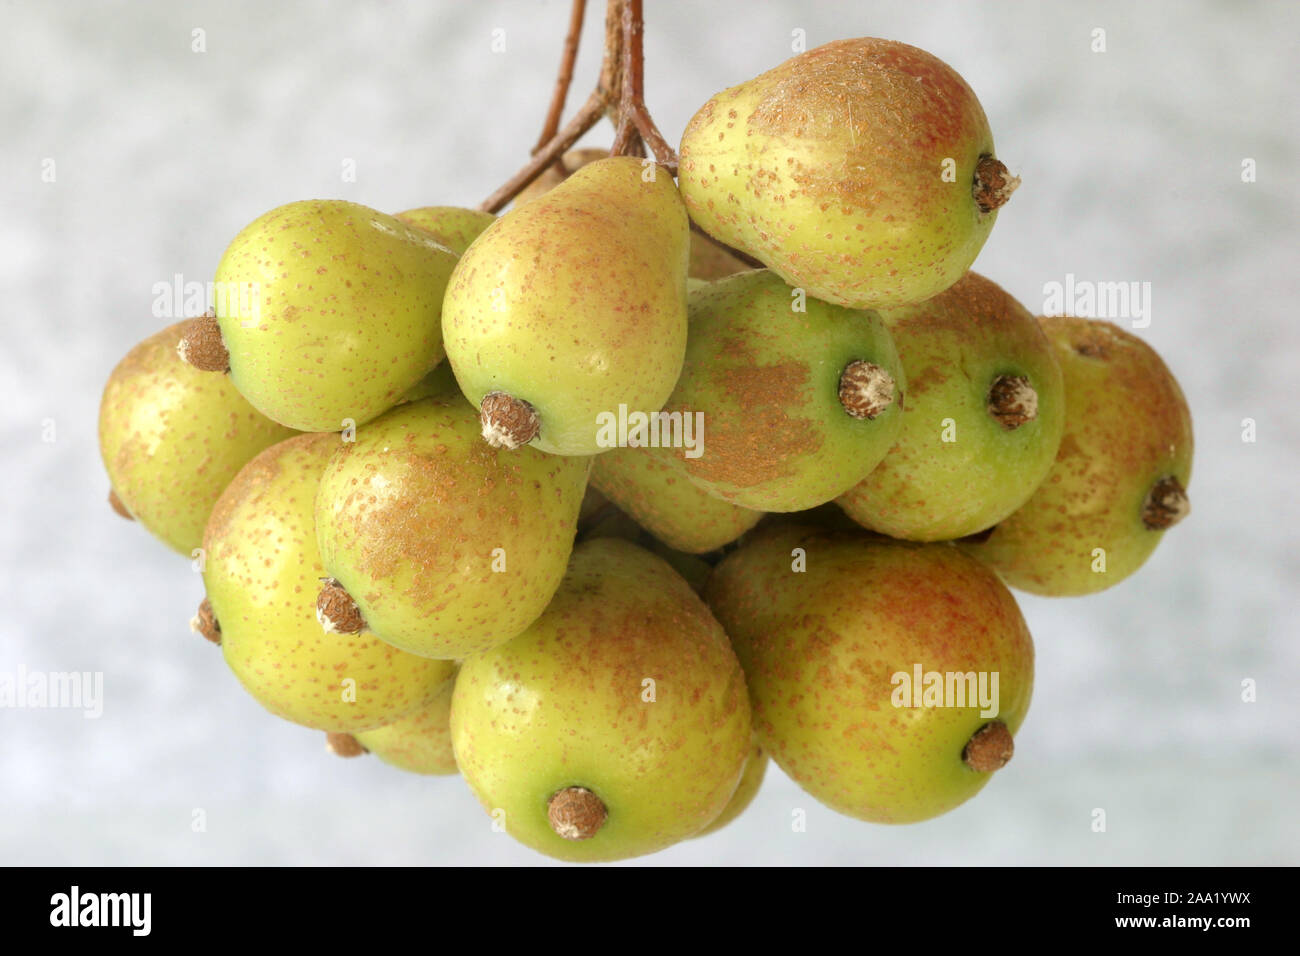 Speierlingsfrüchte (Sorbus domestica) / Fruits of the service tree (Sorbus domestica) Stock Photo